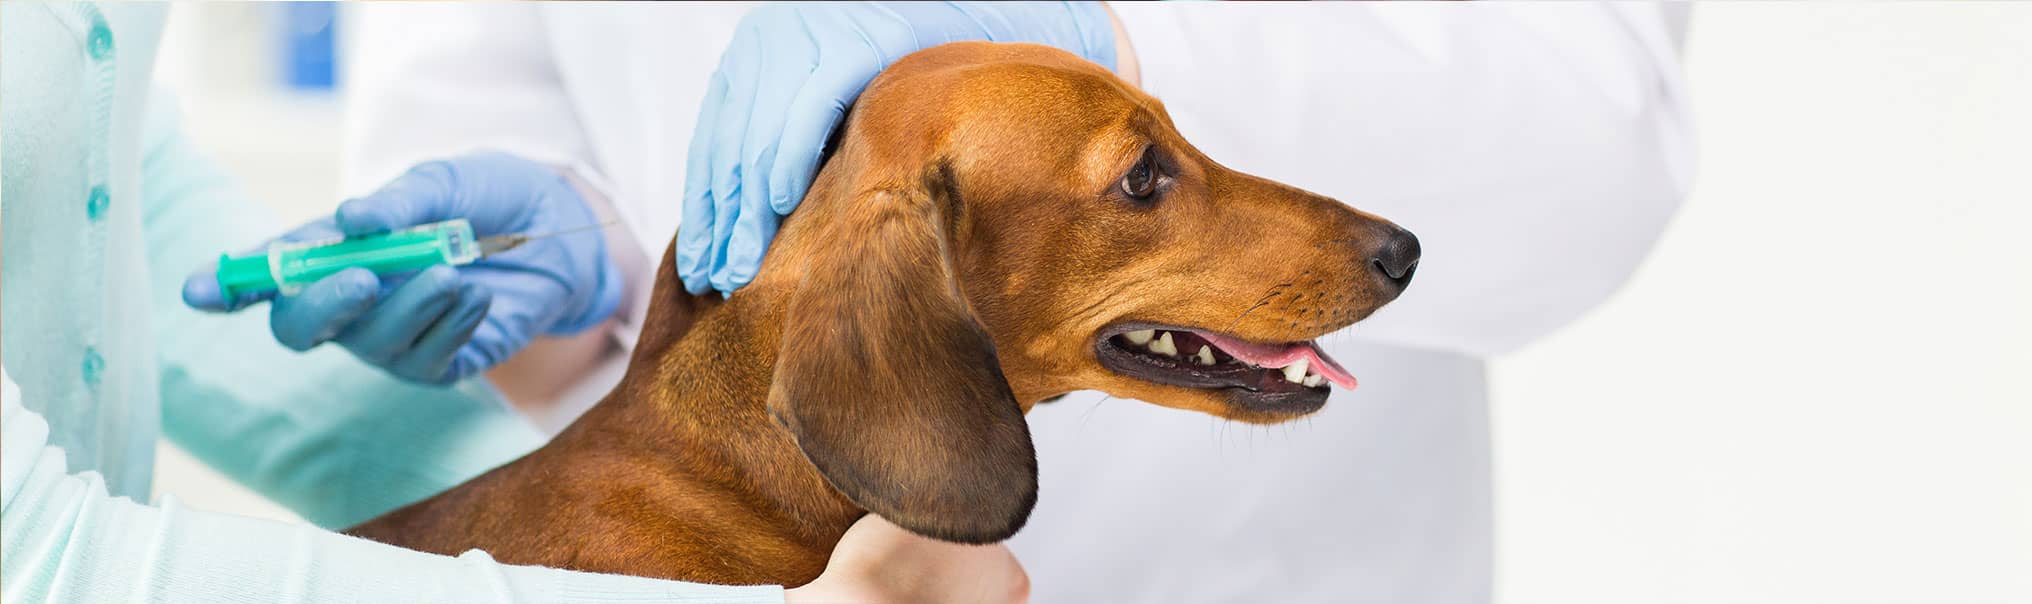 После укуса собаки сделана прививка. Вакцинация собак. Прививка собаке. Вакцинация против бешенства собак. Укол от бешенства собаке.